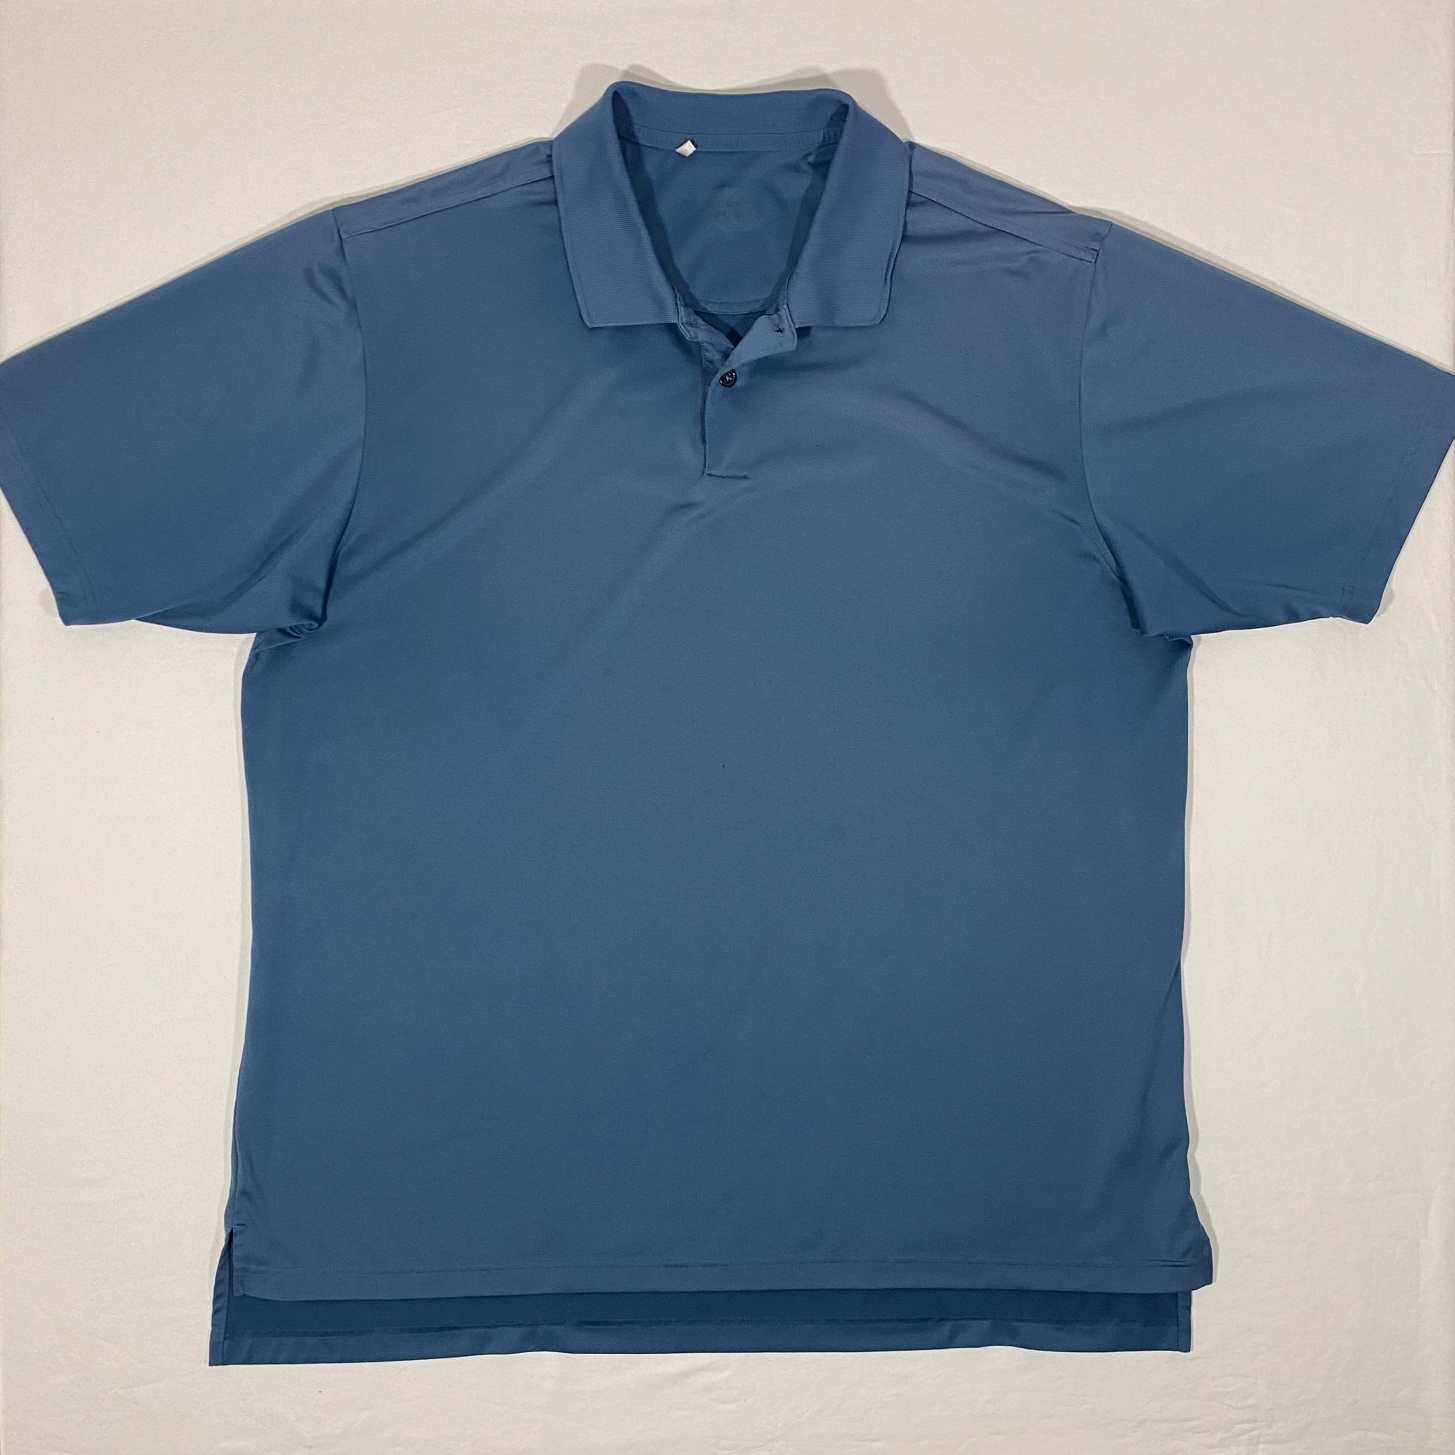 Adidas Golf ClimaLite Men's Size XL Blue Short Sleeve Performance Polo Shirt